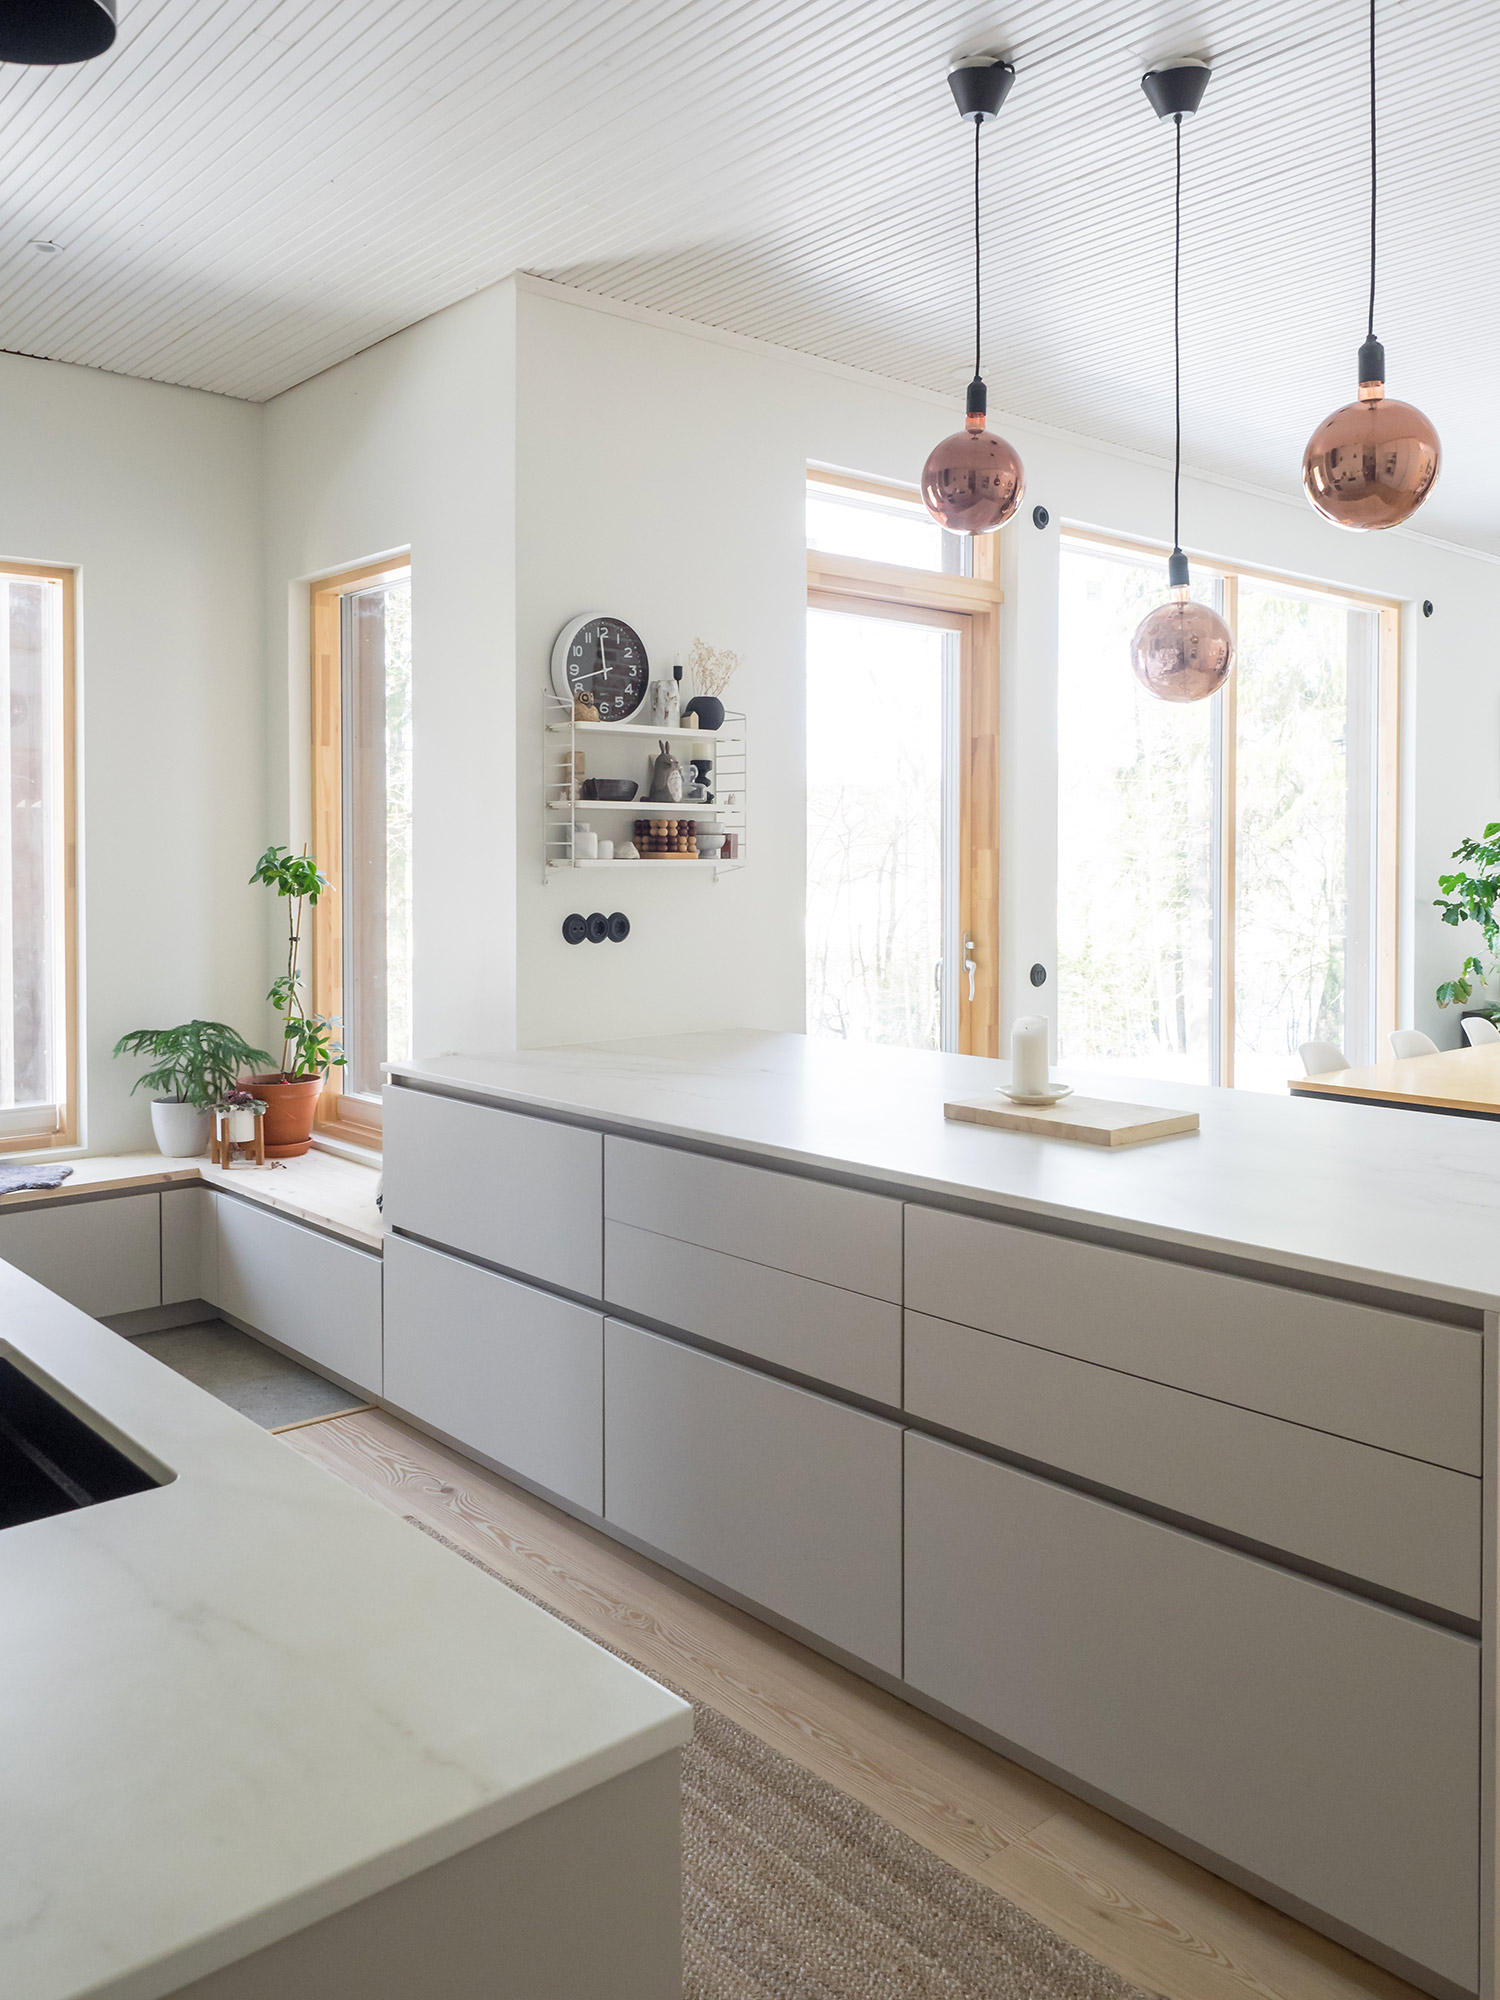 Image of Sanna Piitulainen interior designer Dekton Rem 10 1 in Interior designer Sanna Piitulainen chose Dekton Rem for her new kitchen - Cosentino